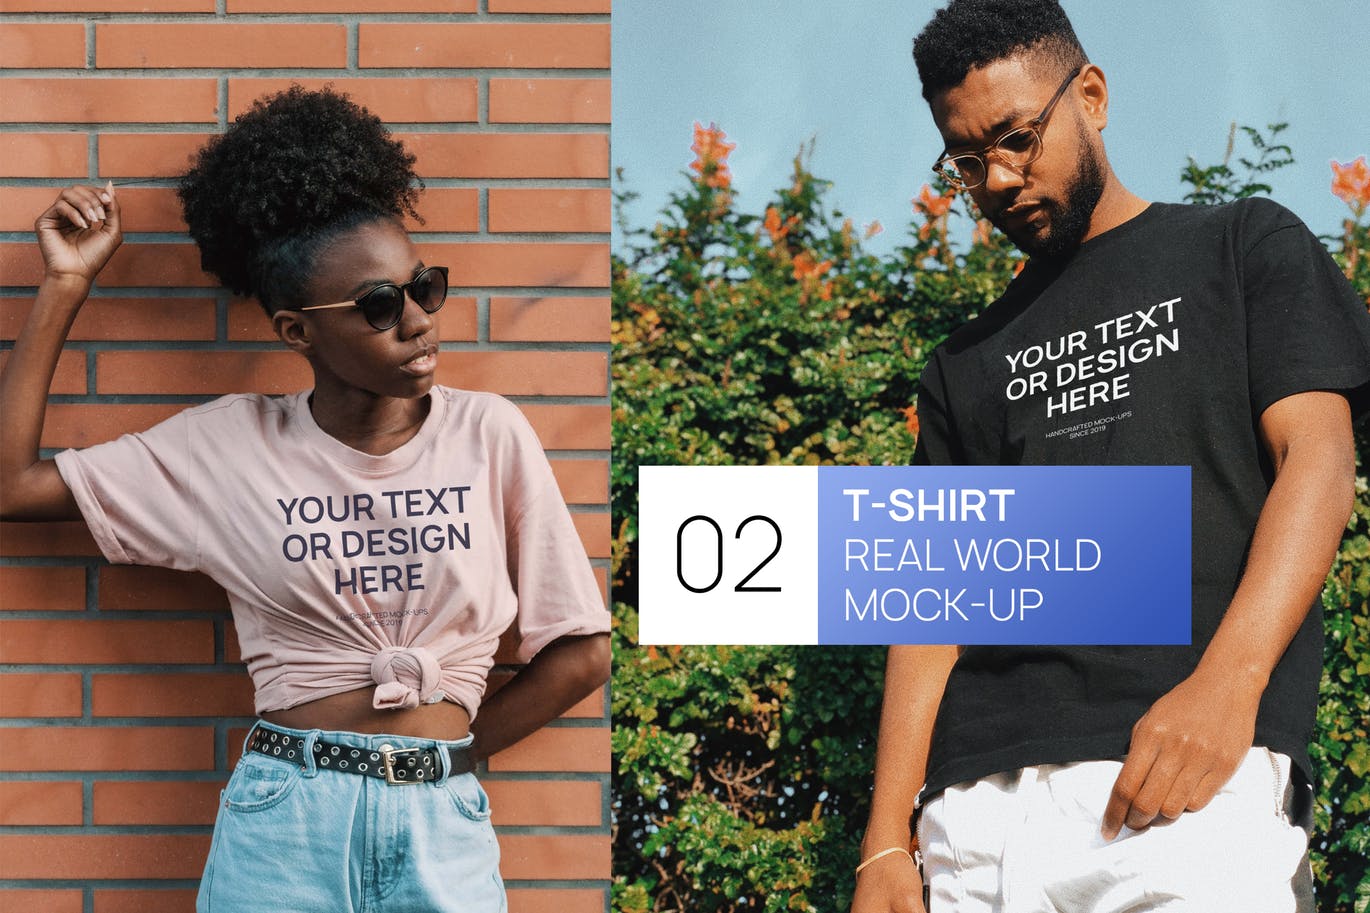 经典情侣黑白T恤印花图样机第一素材精选模板 Two Black Persons T-Shirt Real World Photo Mock-up插图